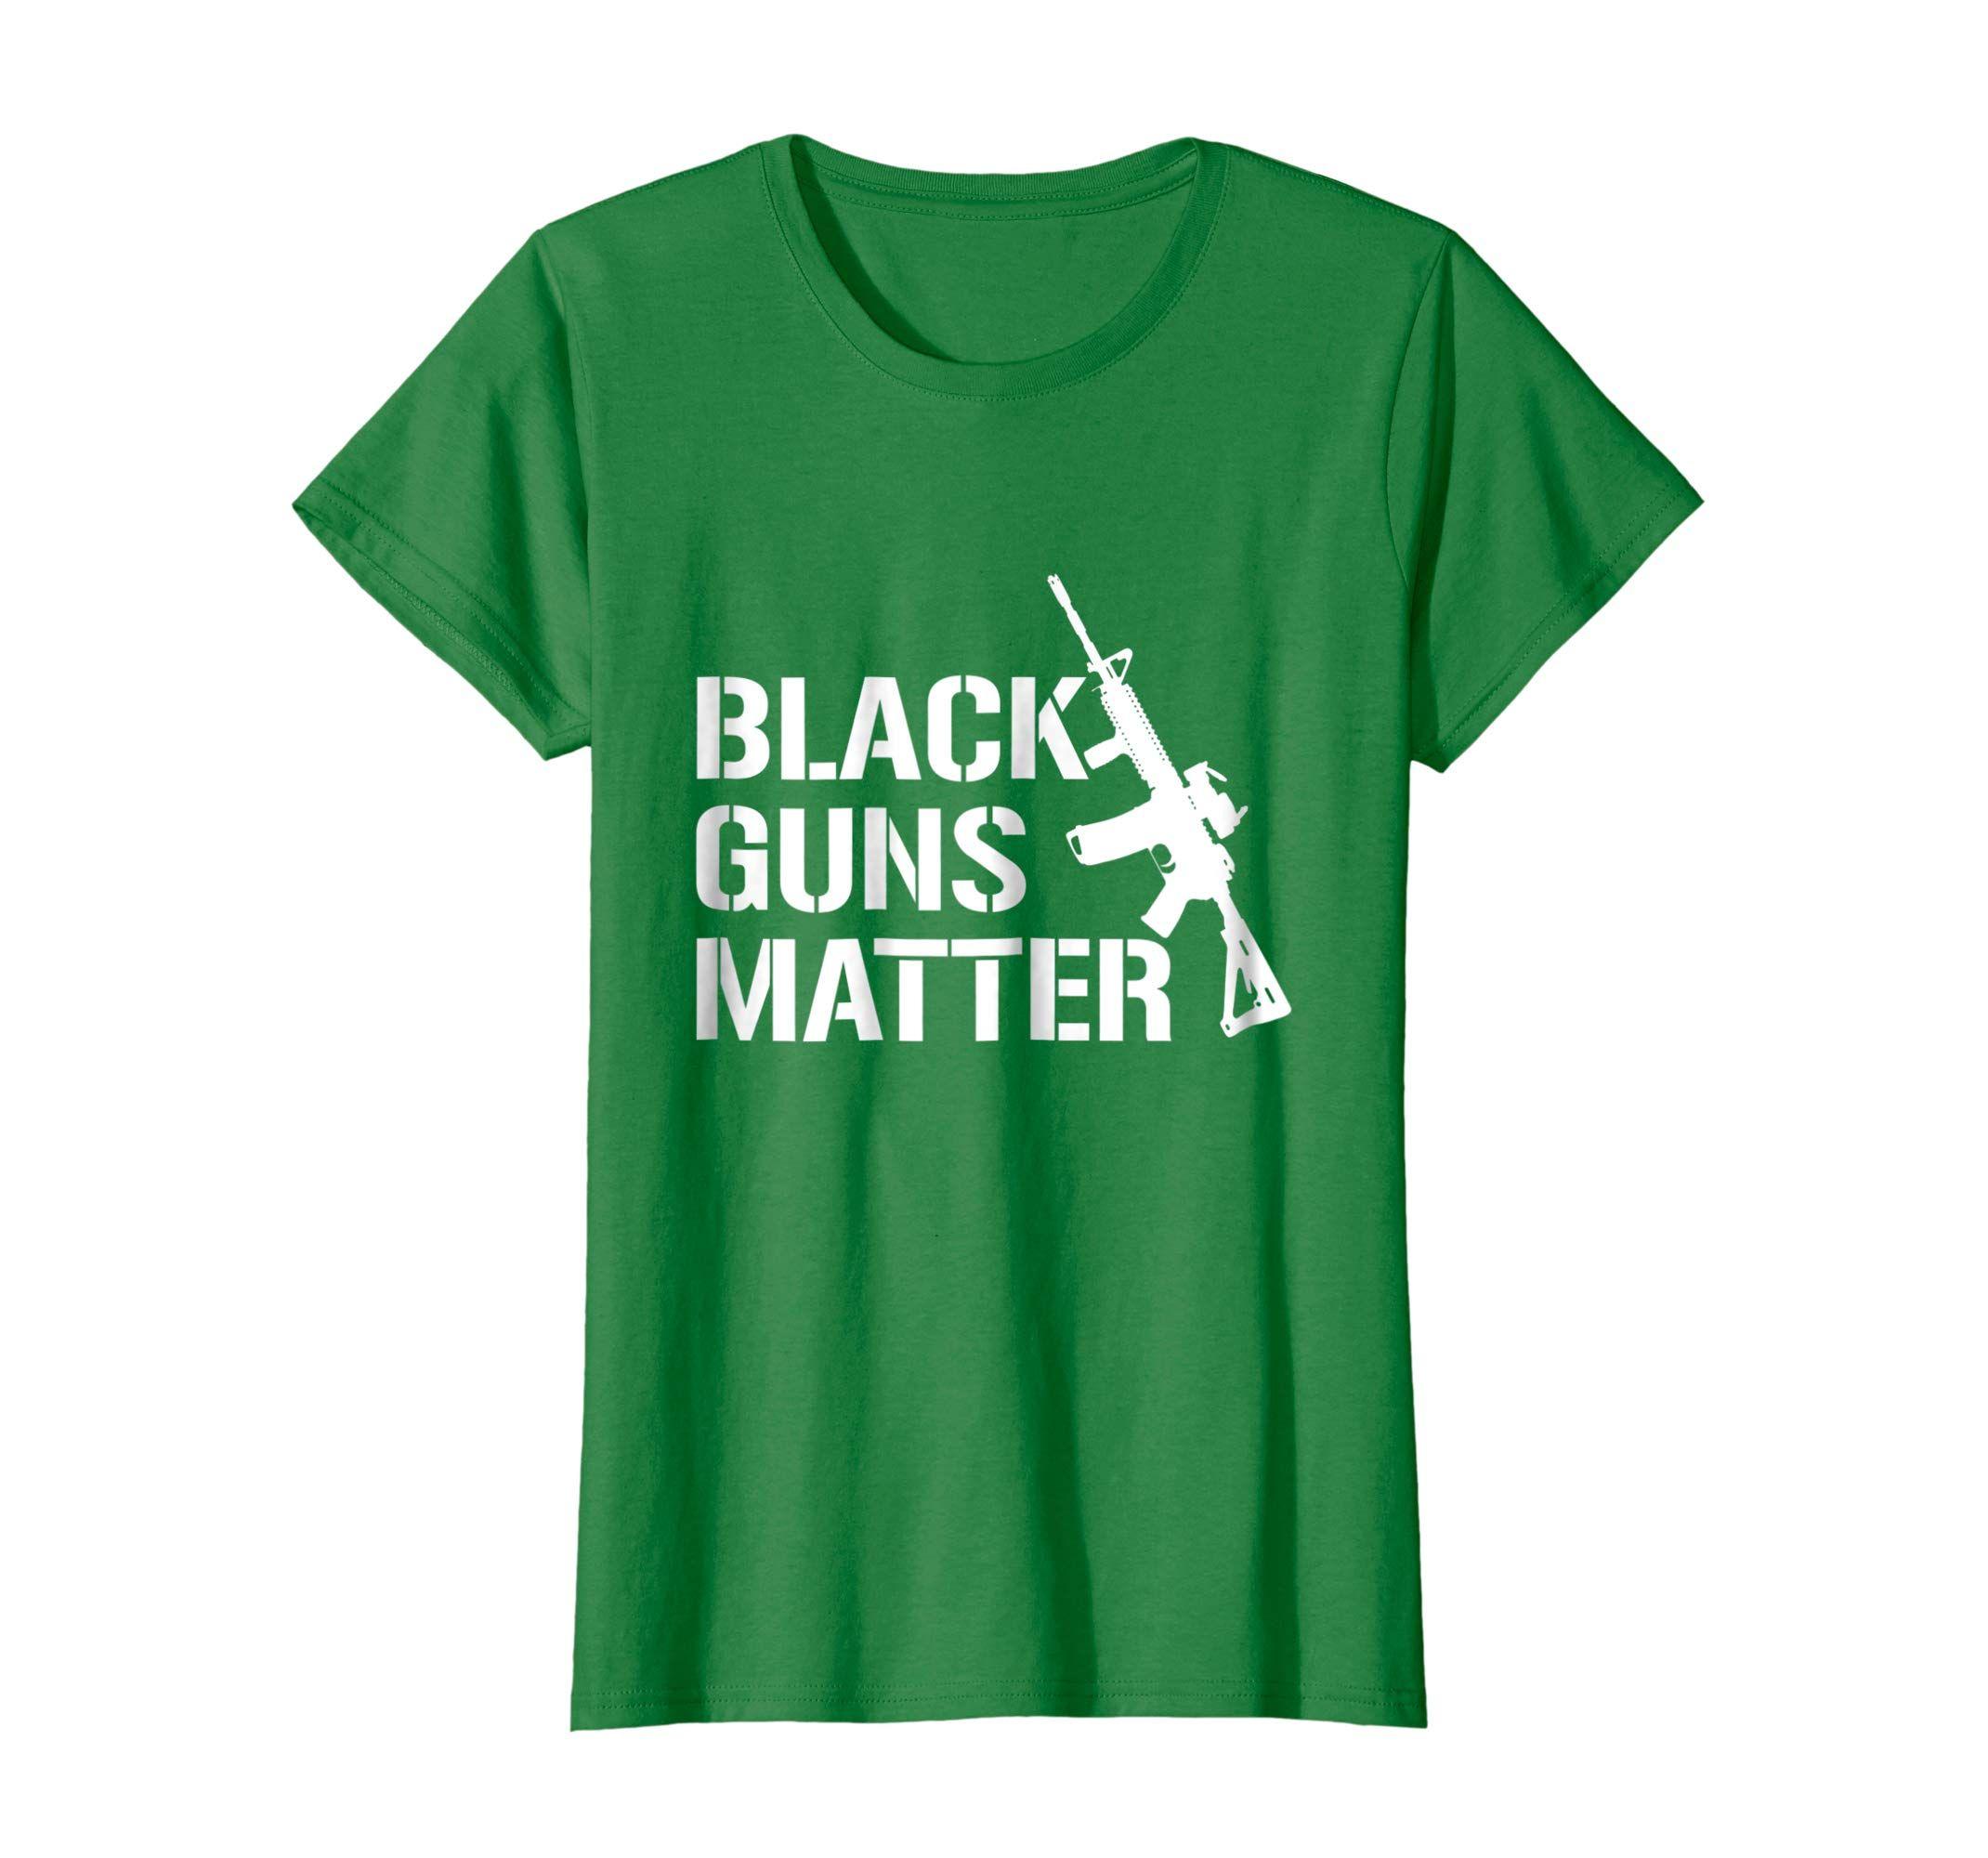 Green and Black Guns Logo - Amazon.com: Black Guns Matter T-shirt: Clothing